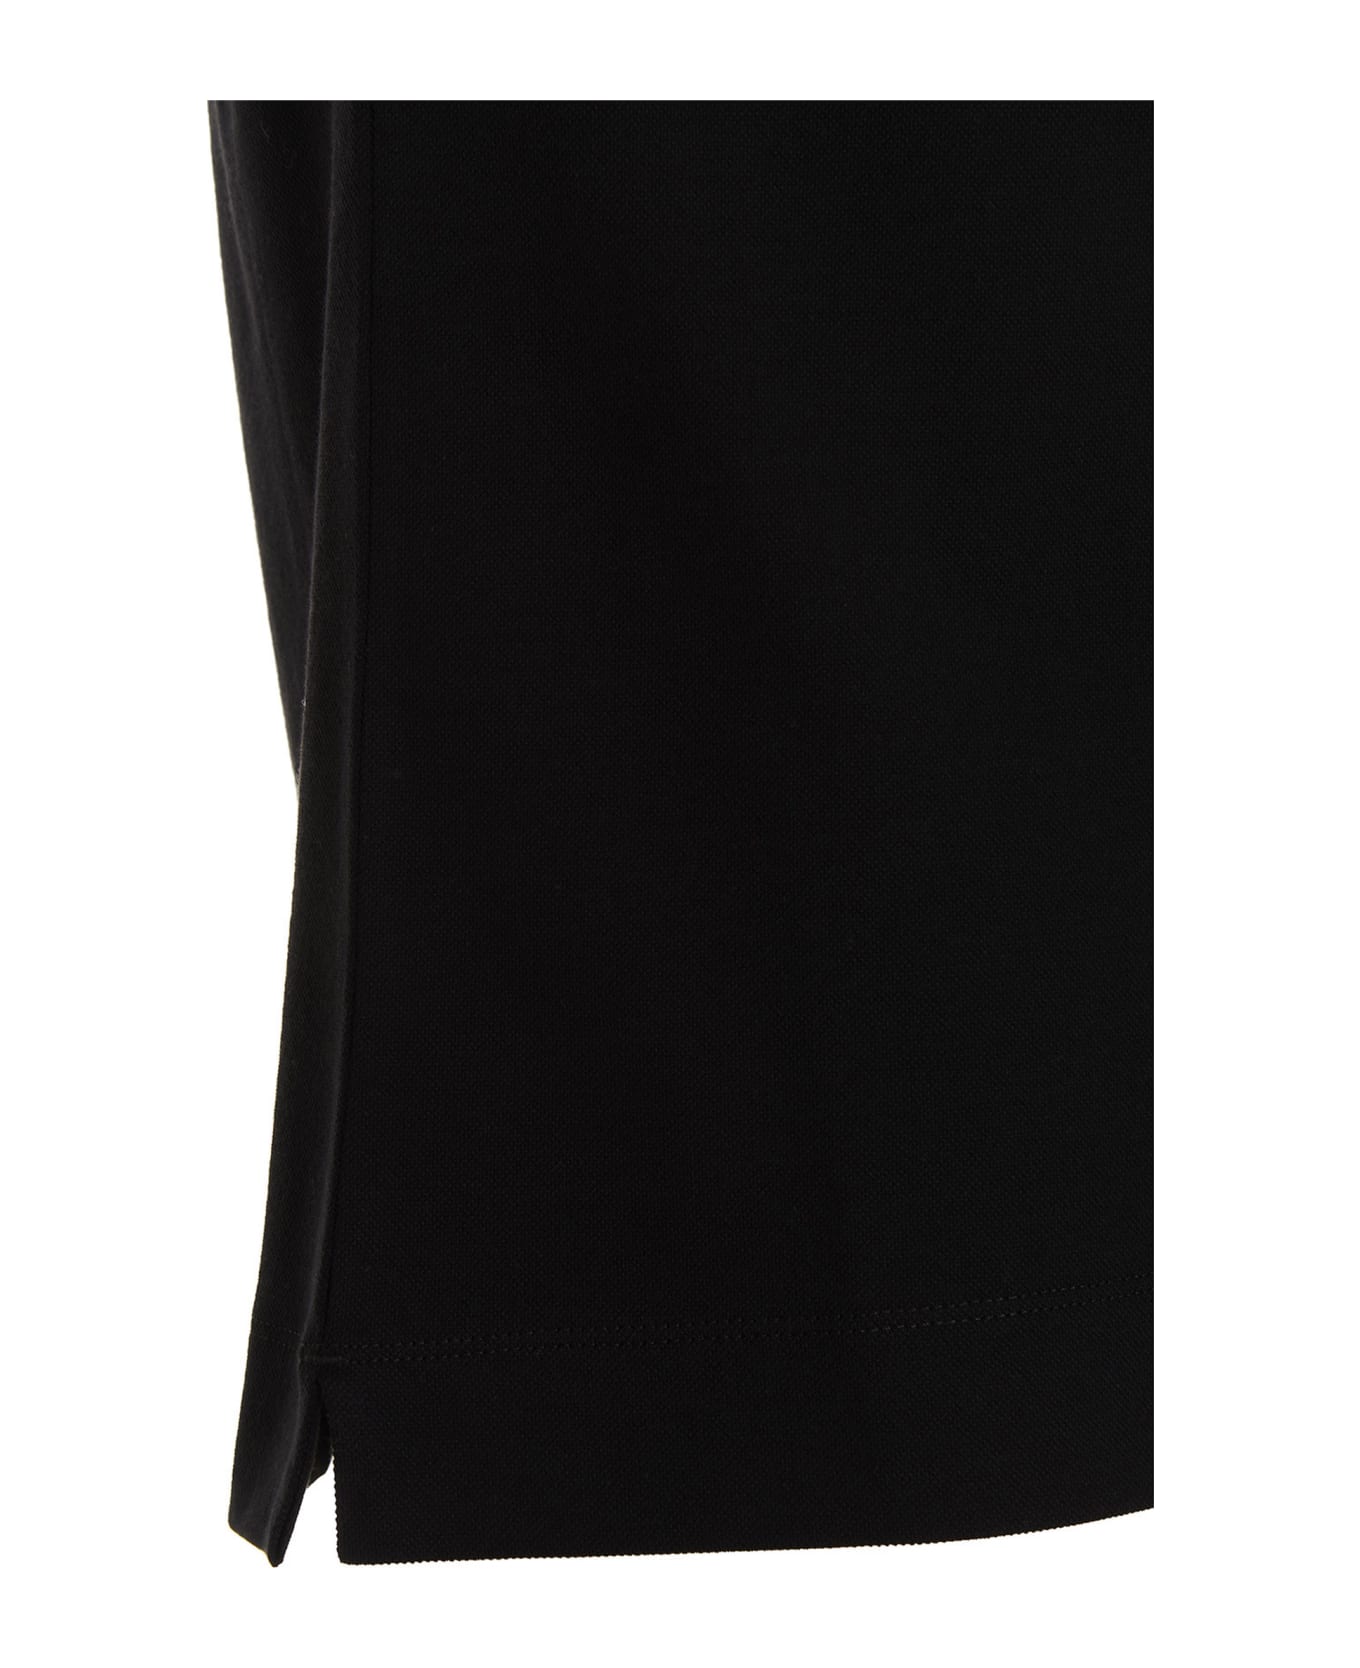 Ermenegildo Zegna Logo Print Polo Shirt - Black  